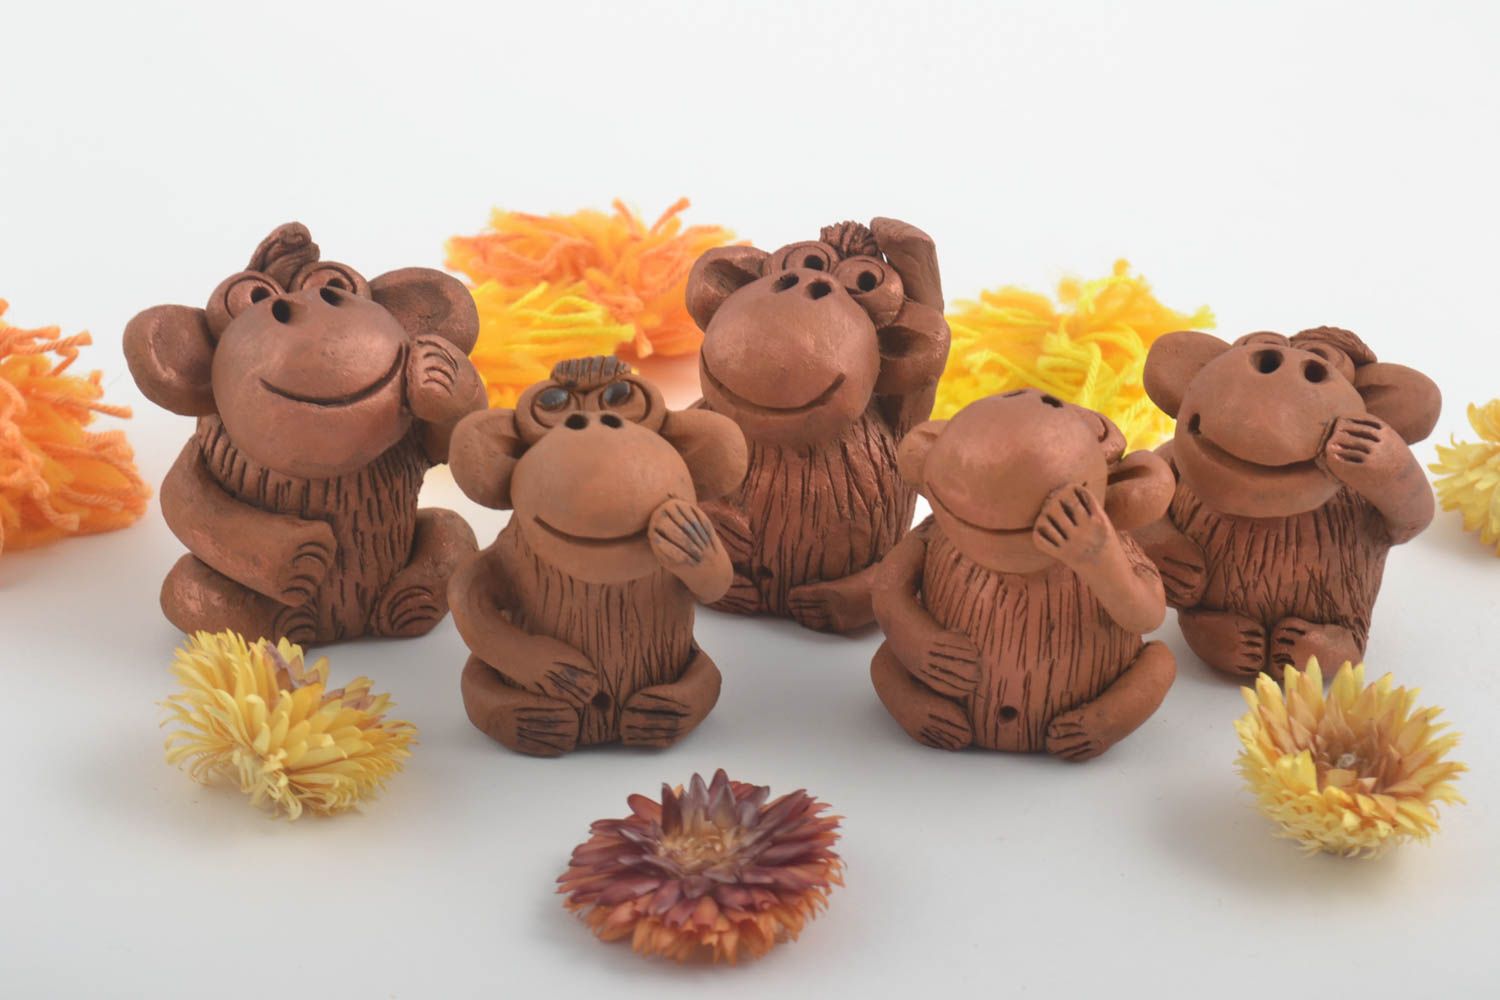 Set of 5 handmade ceramic figurines monkey statuettes sculpture art gift ideas photo 1